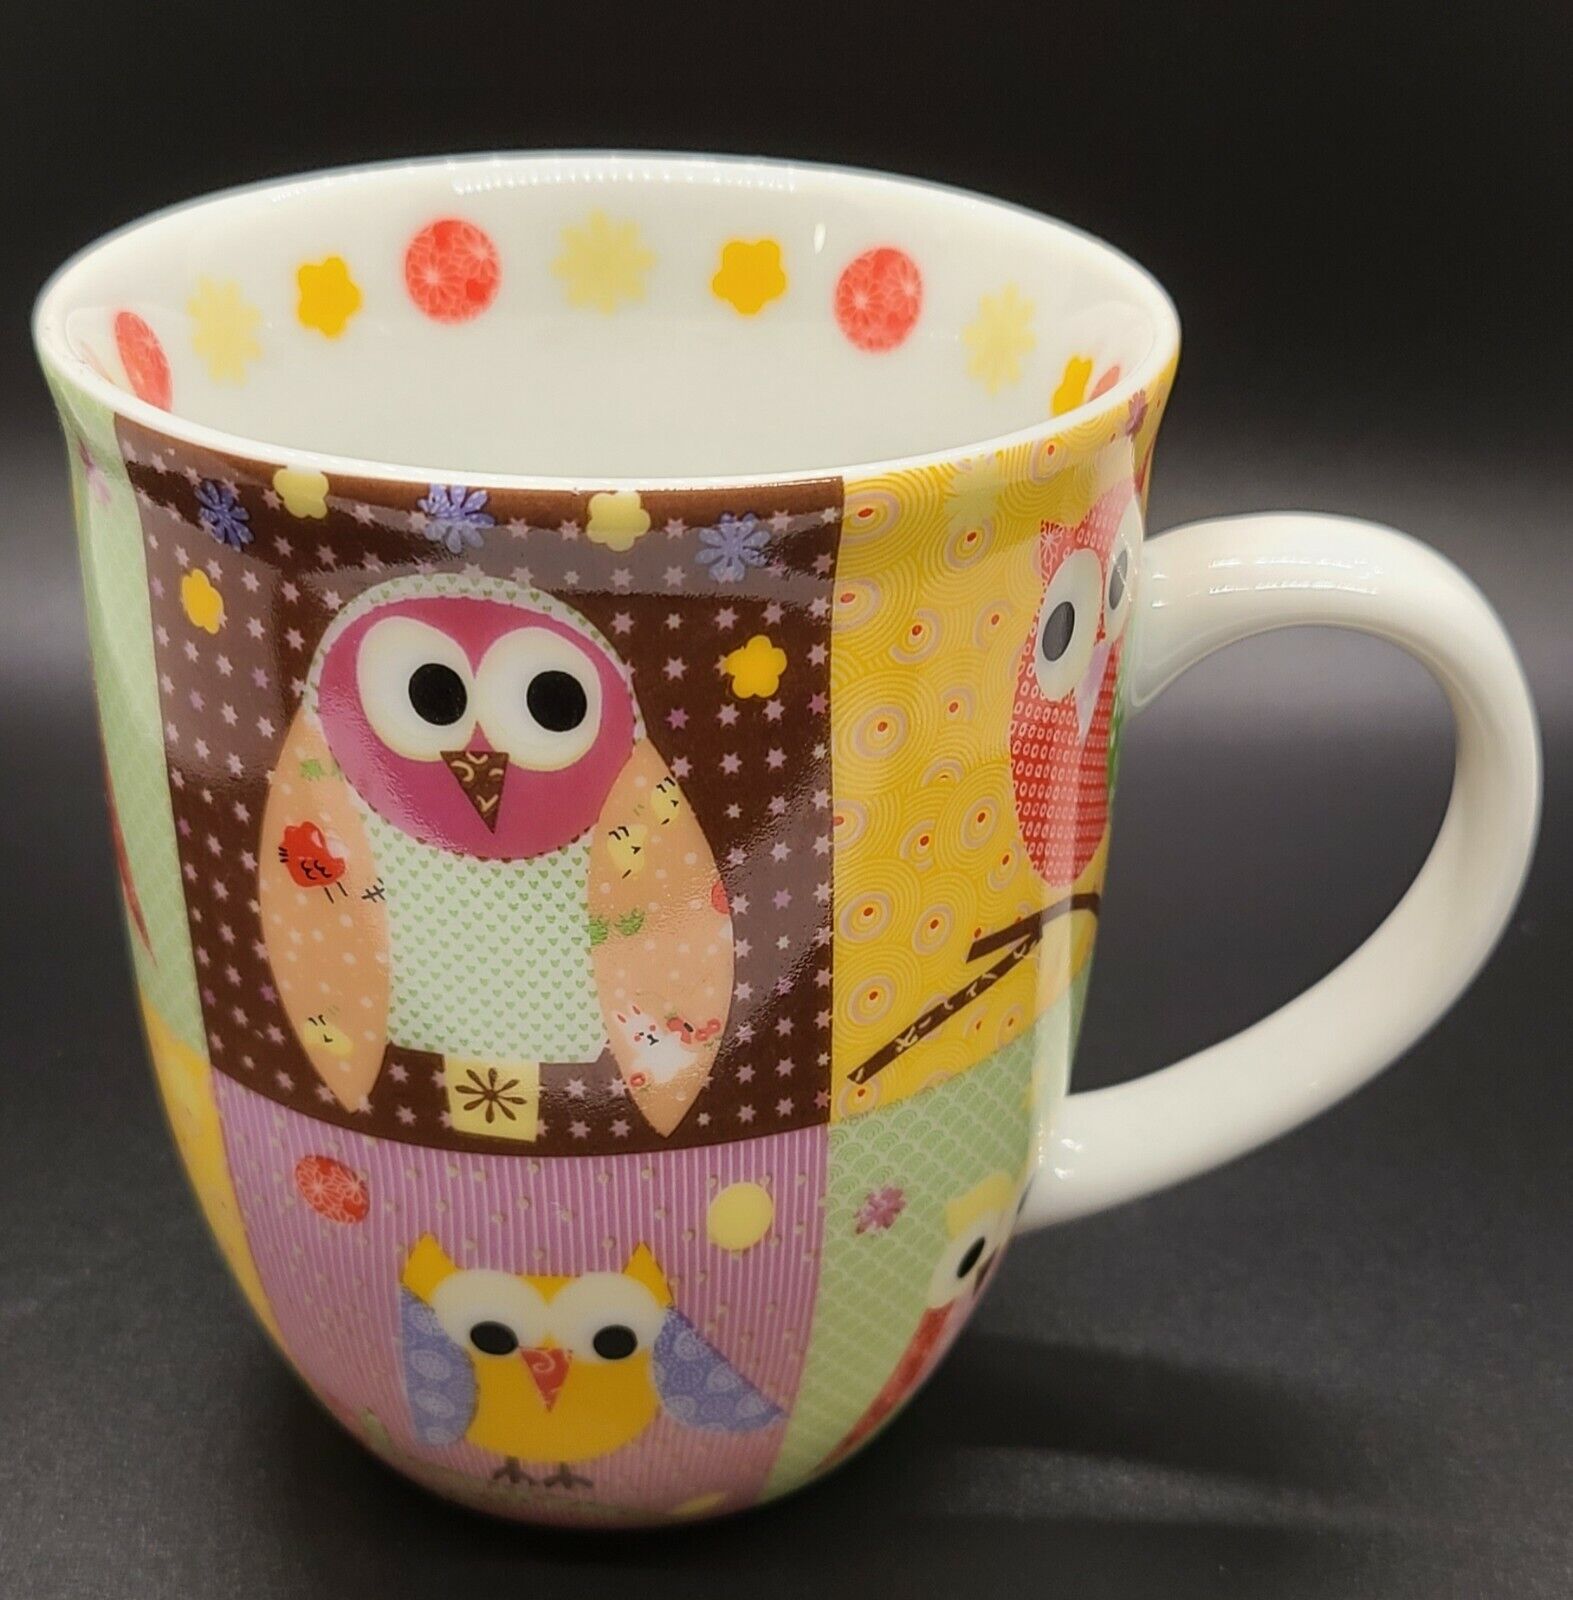 Owls By Creative Tops Ltd. Large Patchwork Coffee Mug Cup Design Inside Rim L6